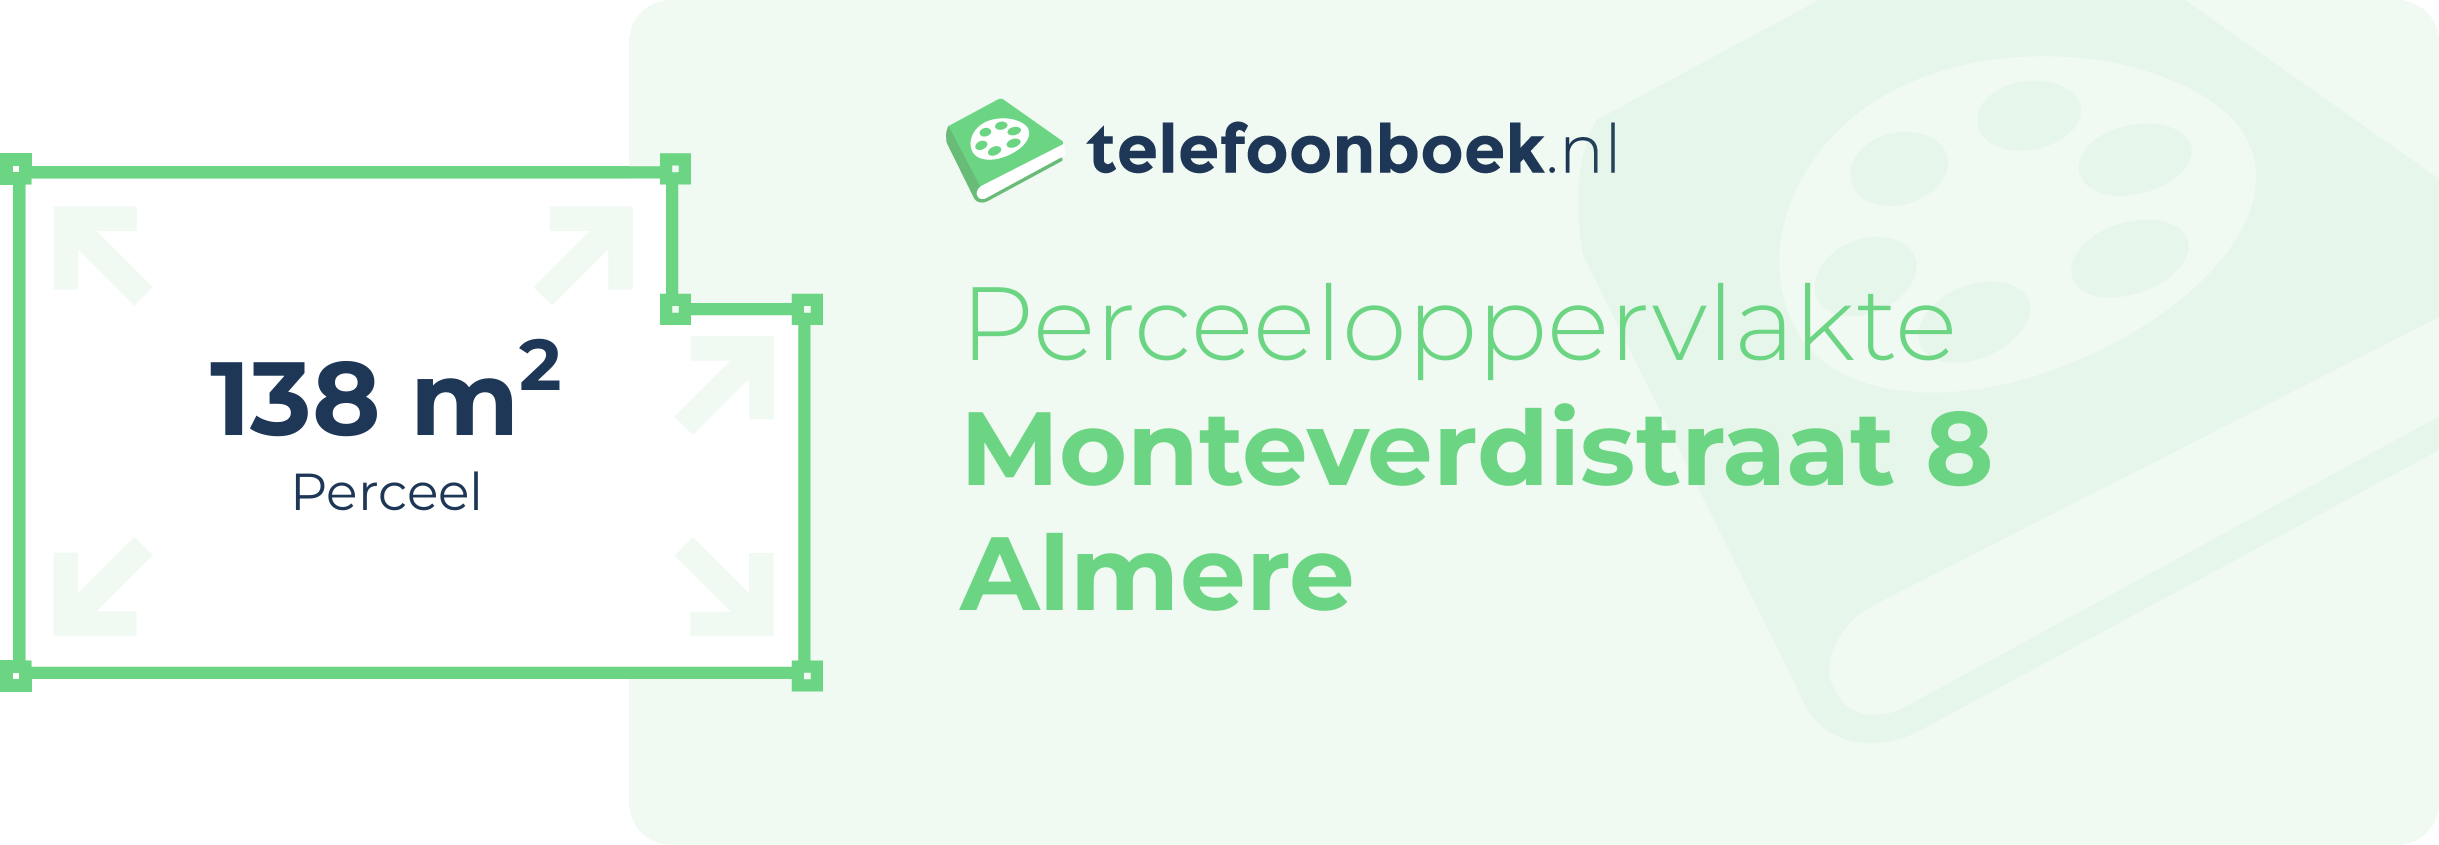 Perceeloppervlakte Monteverdistraat 8 Almere